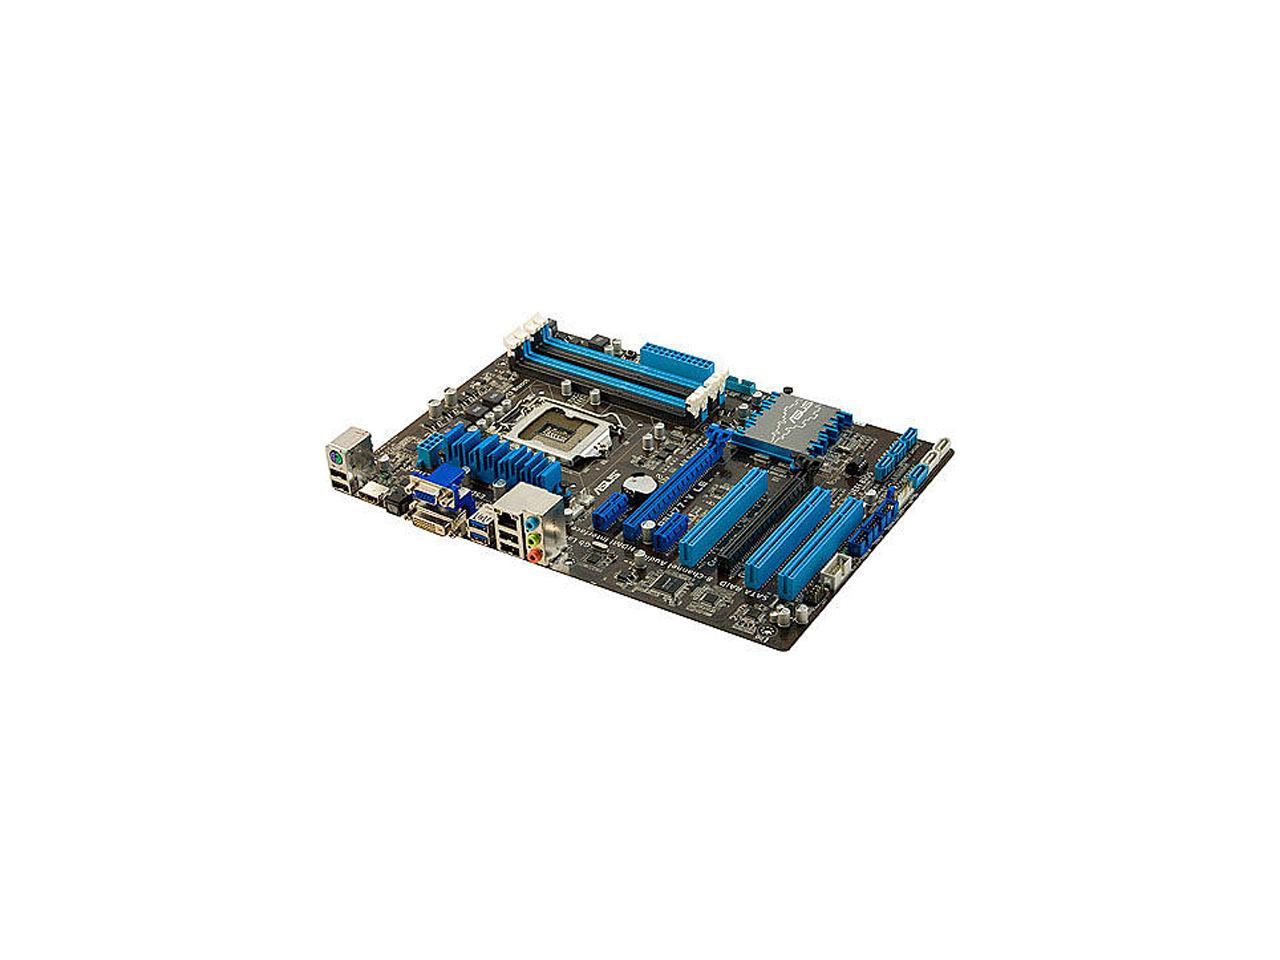 ASUS P8H77-V LE LGA 1155 Intel H77 HDMI SATA 6Gb/s USB 3.0 ATX Intel Motherboard